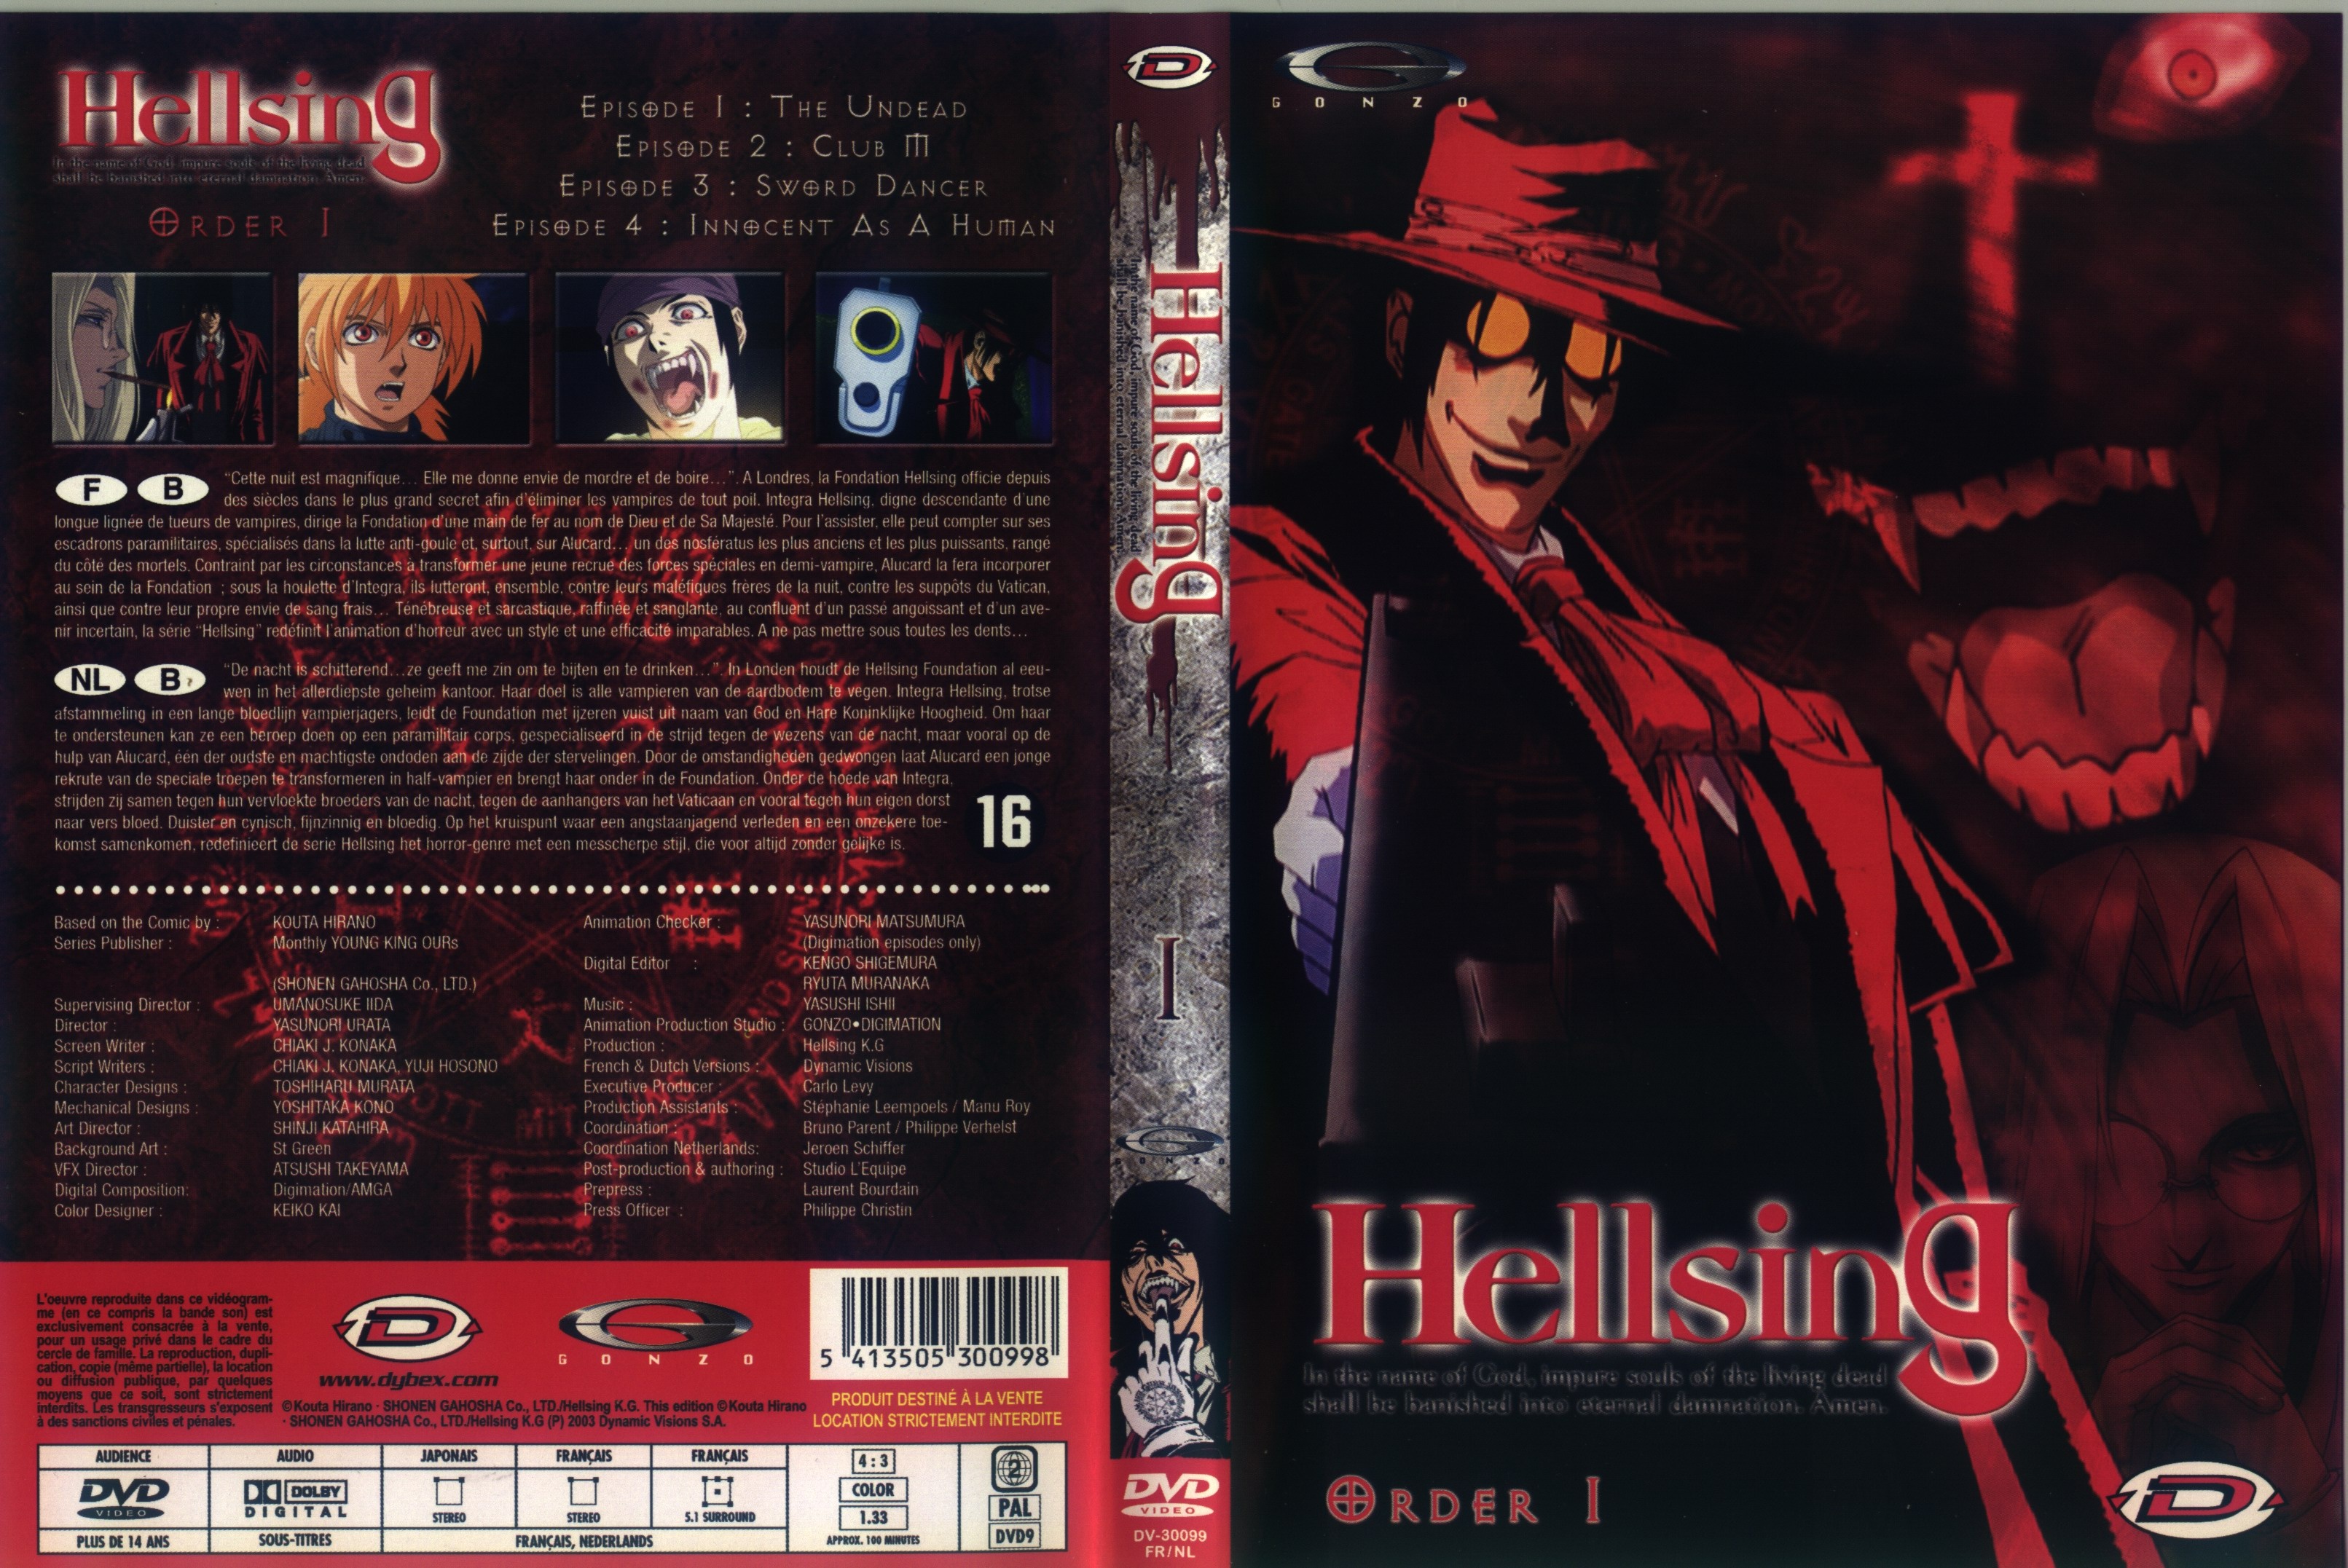 Jaquette DVD Hellsing vol 1